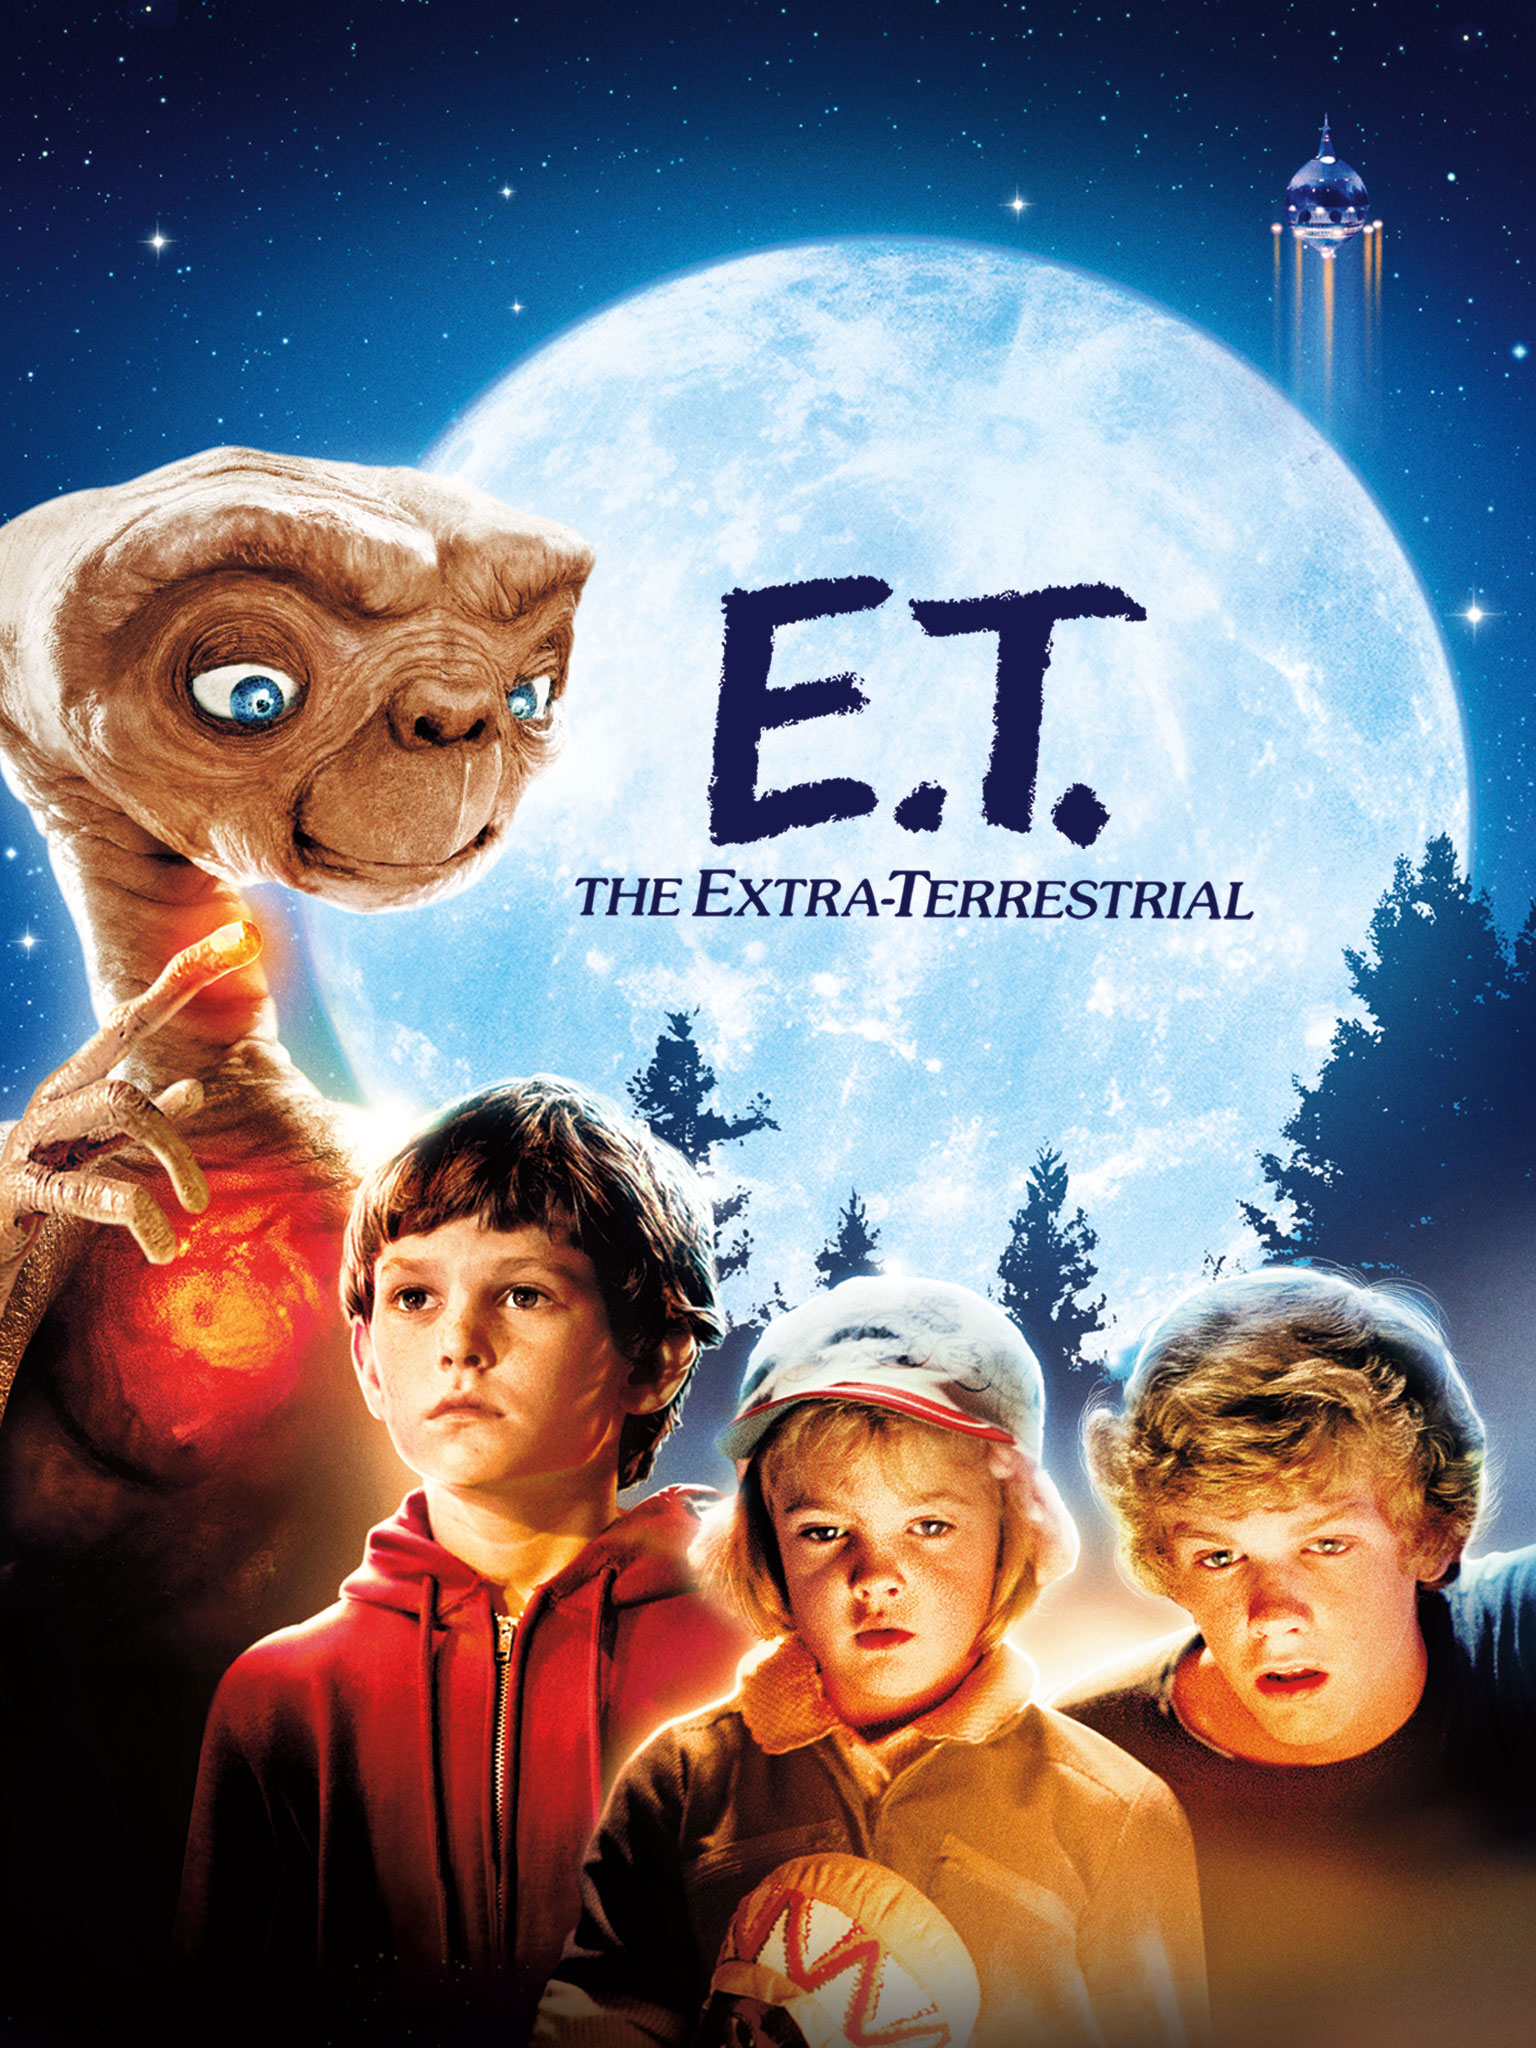 E.T. the Extra-Terrestrial  (1982)
Happy Birthday, Drew Barrymore! 